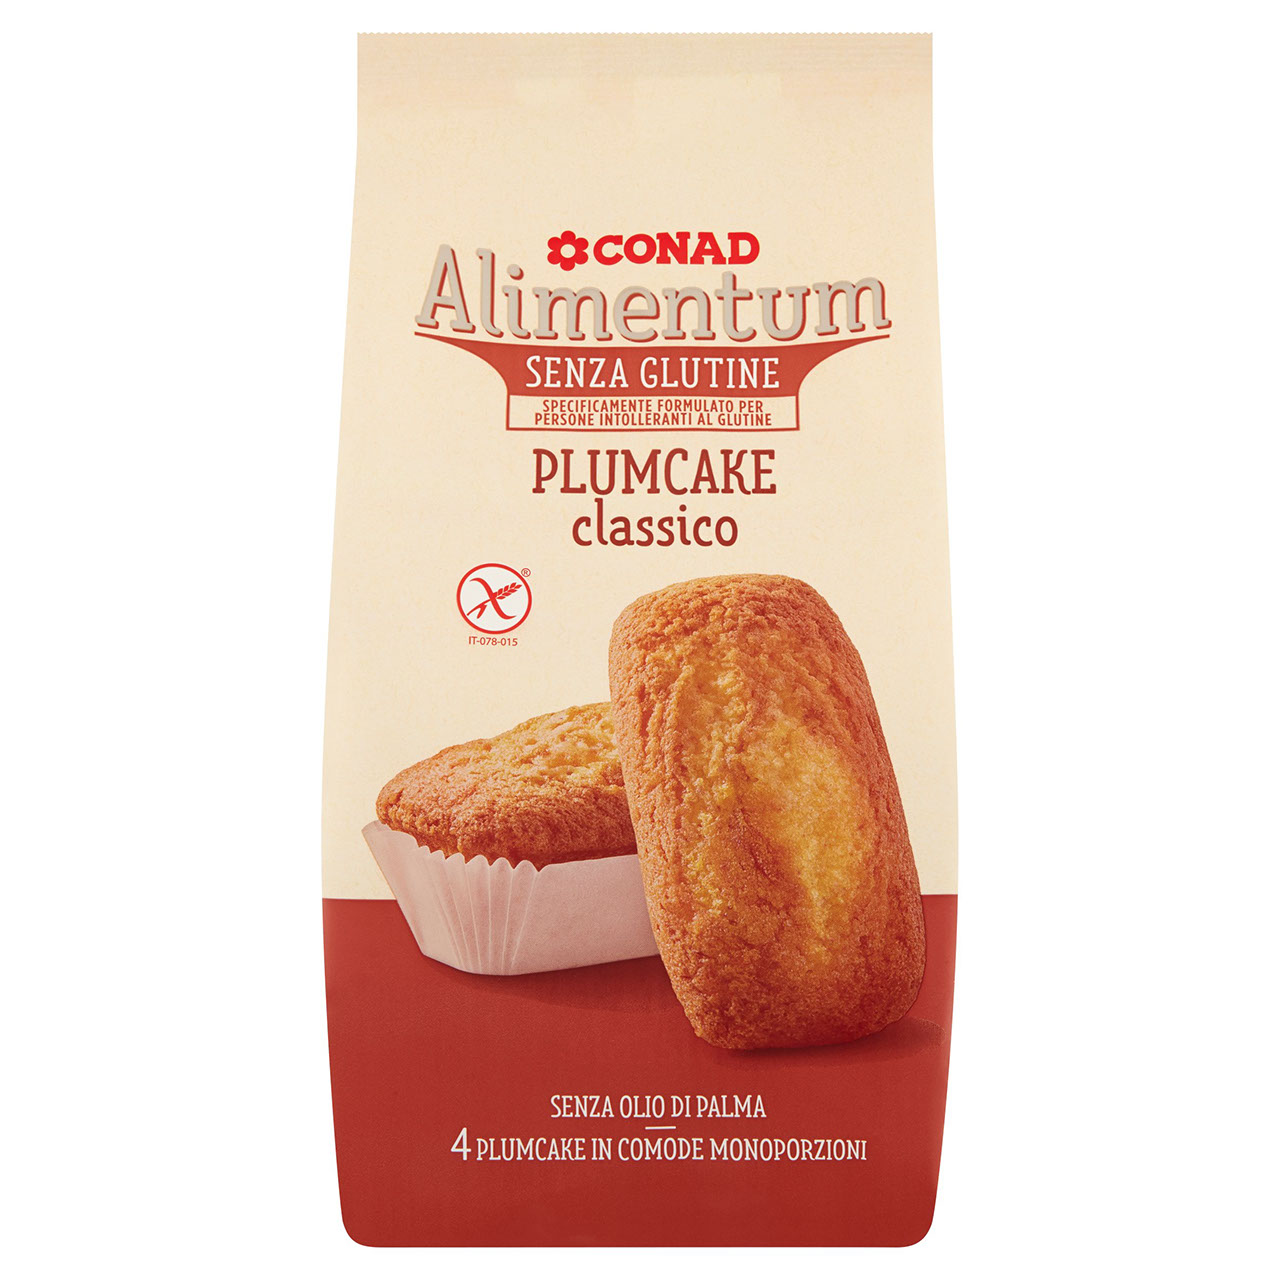 Plumcake Senza Glutine Classico Conad online